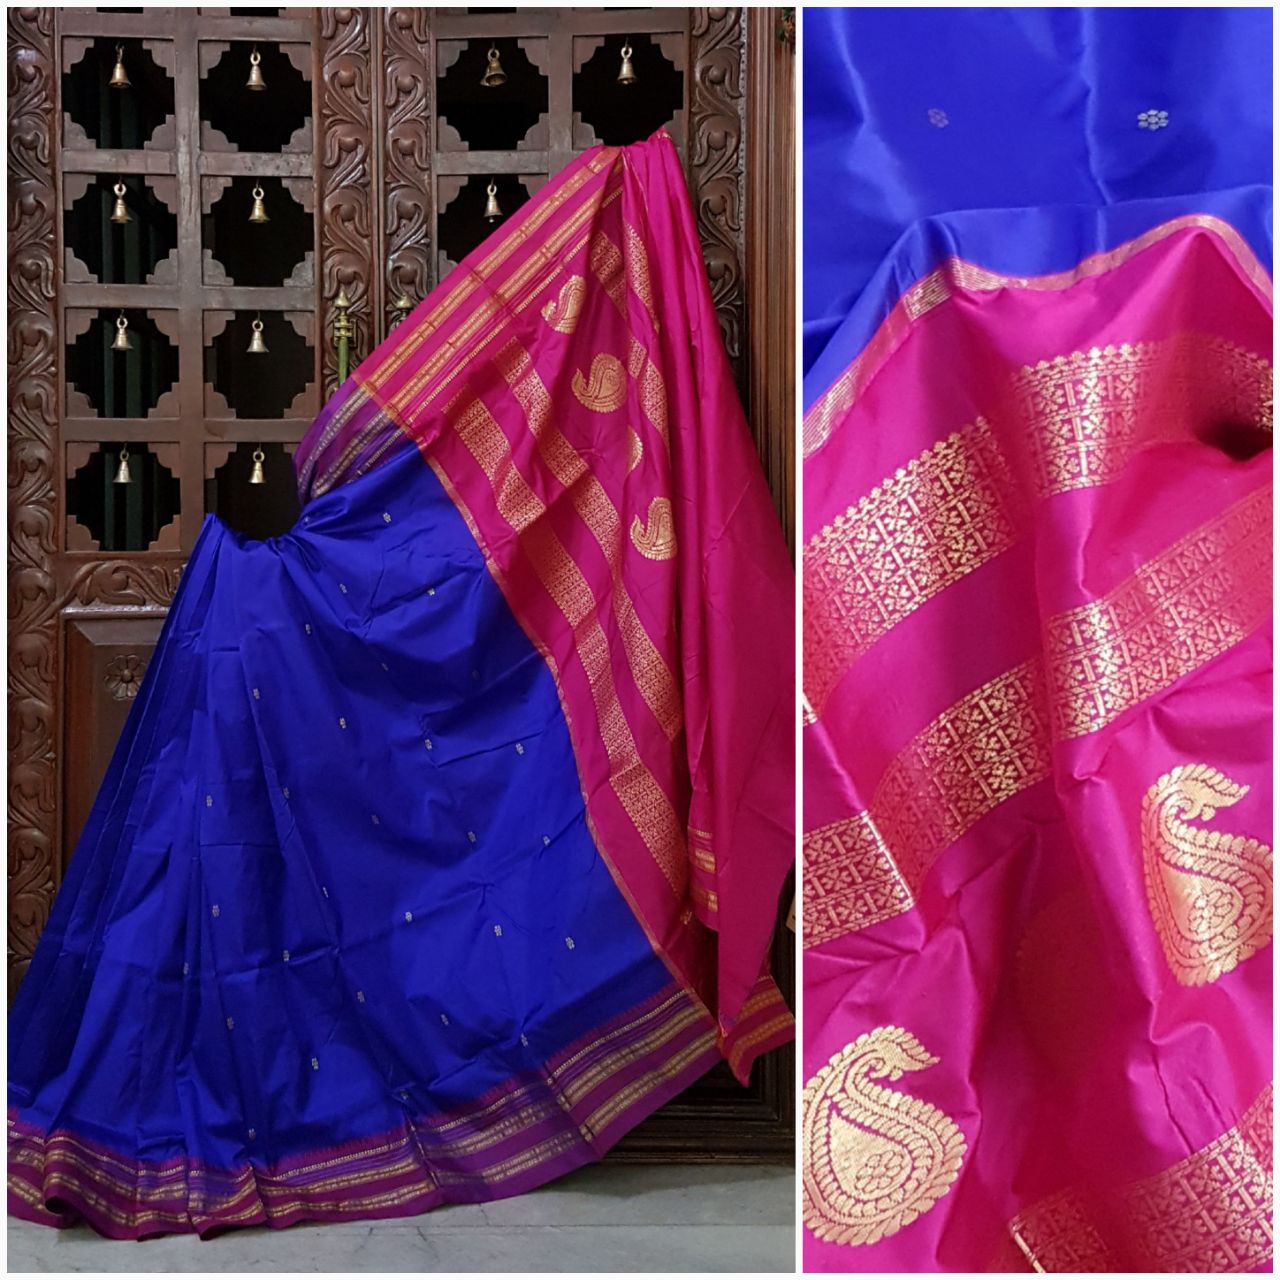 Handloom royal blue Narayanet with contrast pink pallu and border